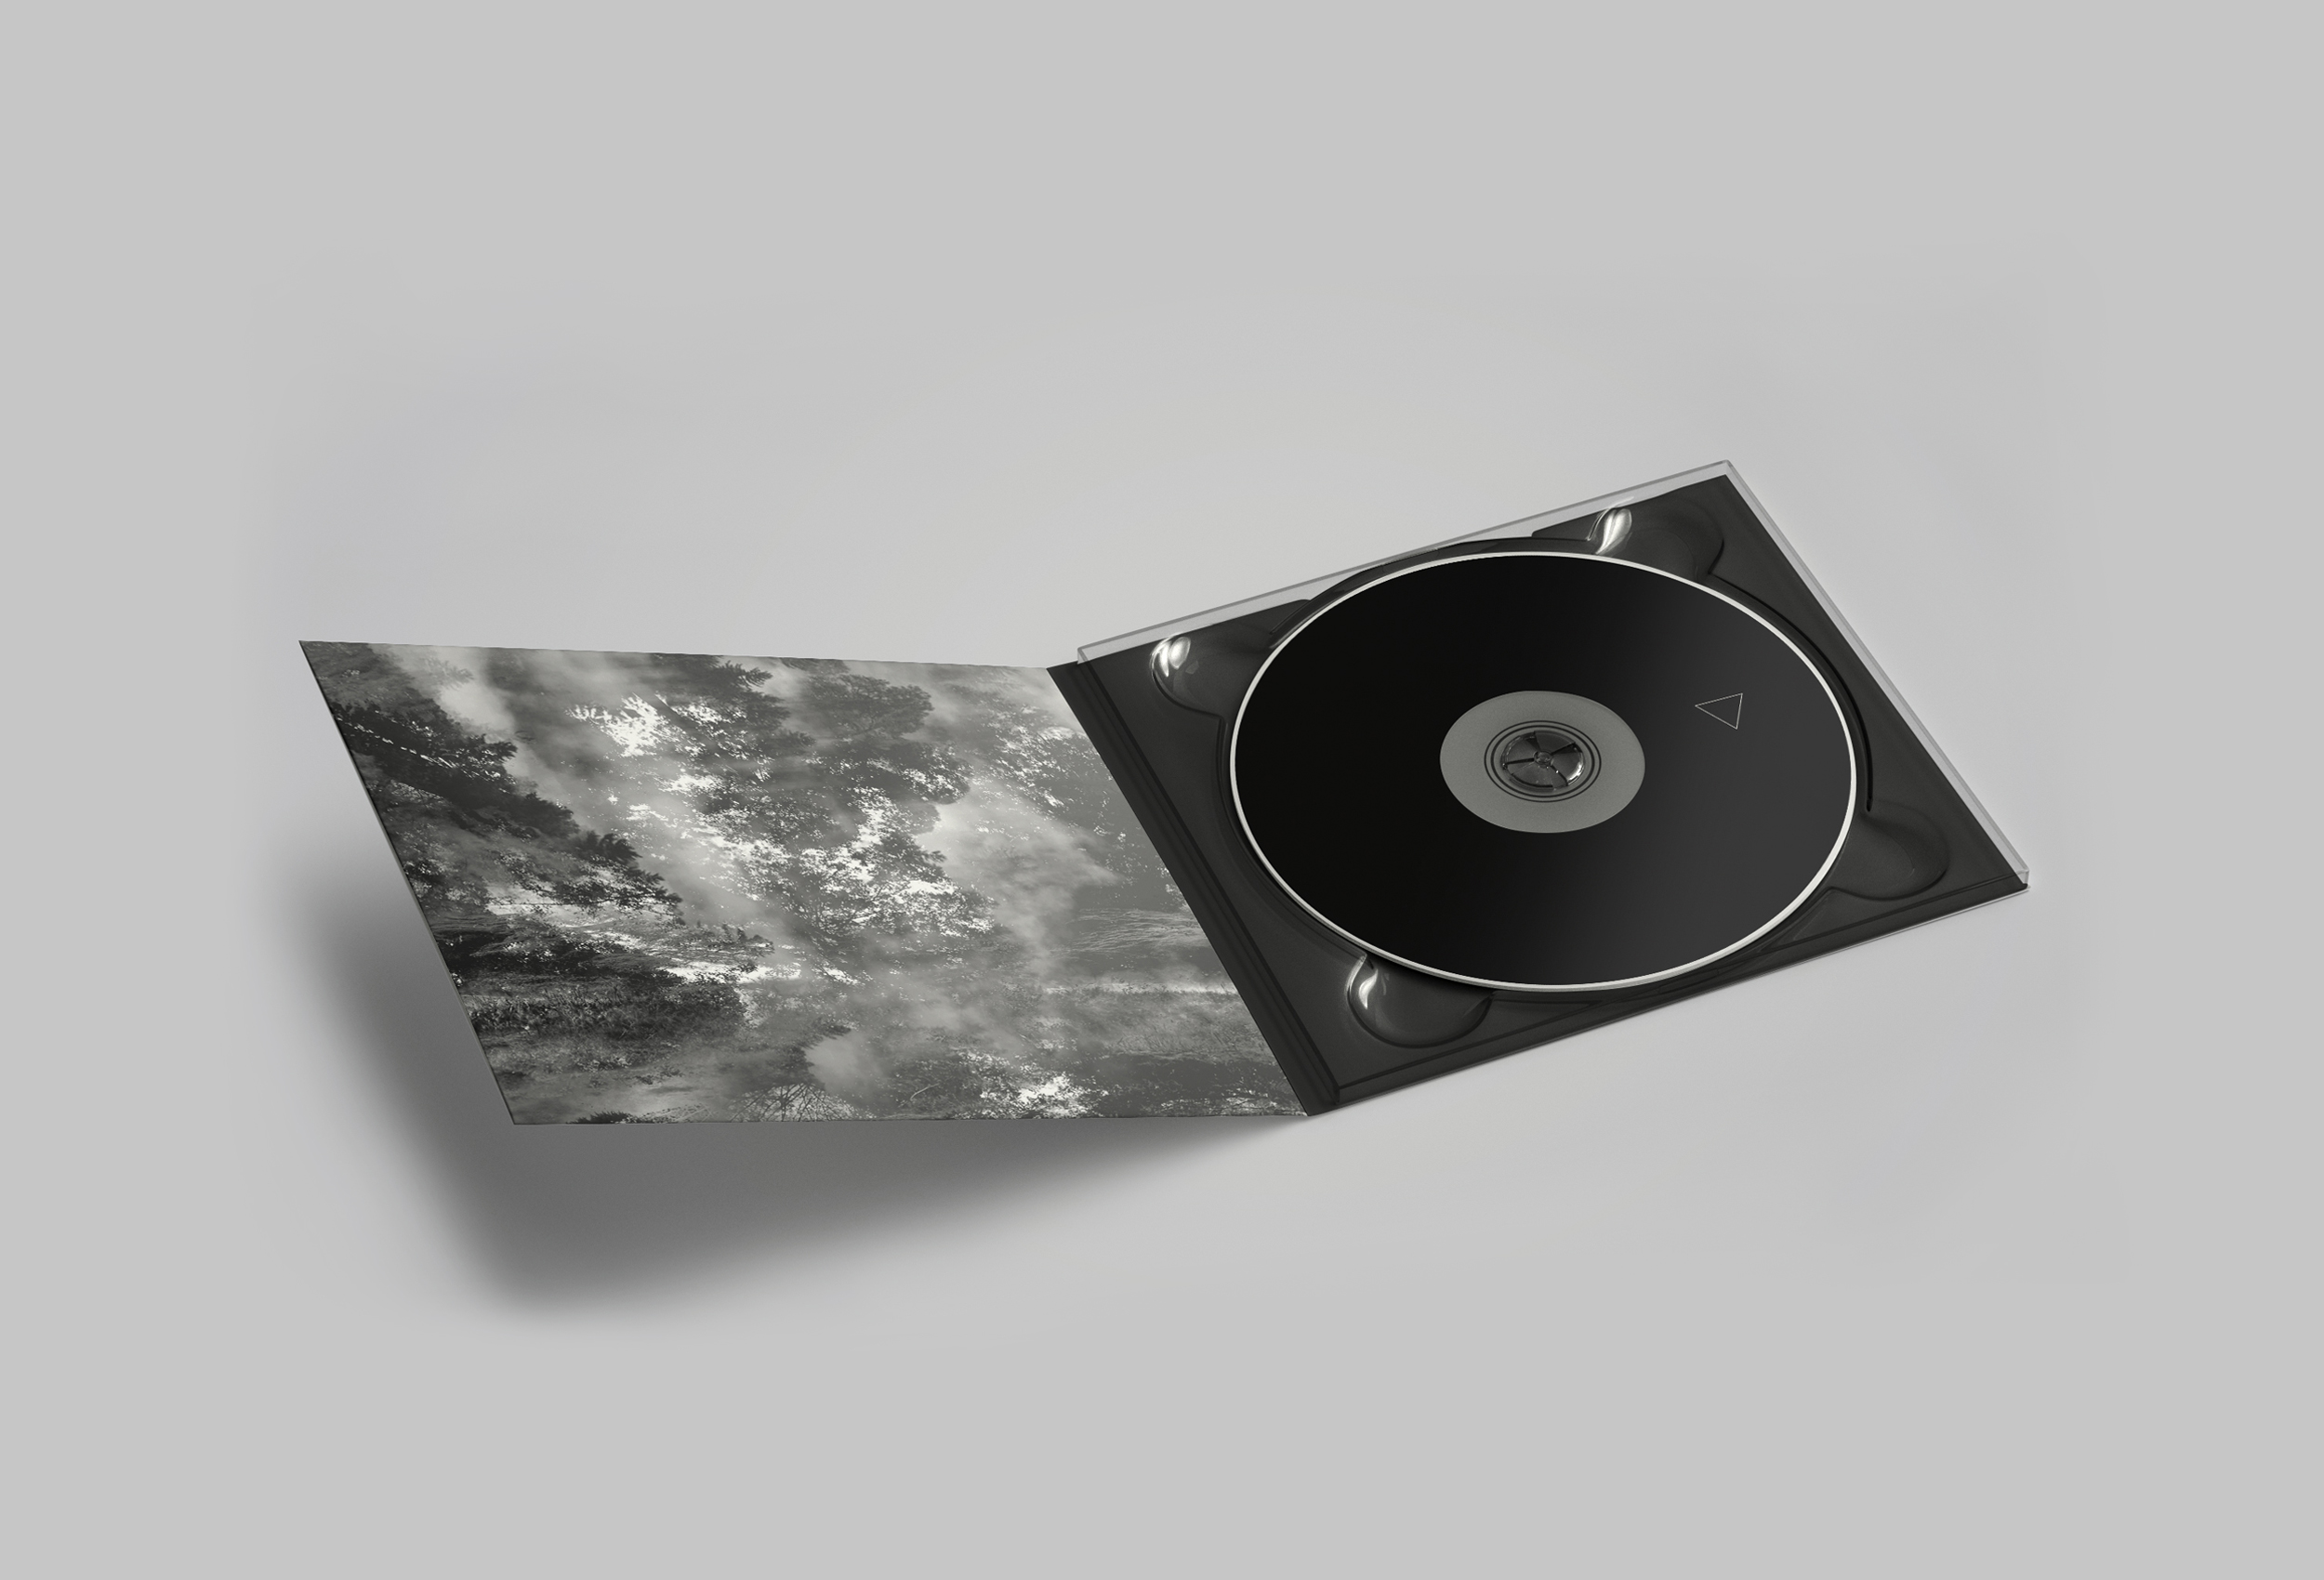 Flawed - Strangers album artwork and CD packaging design.